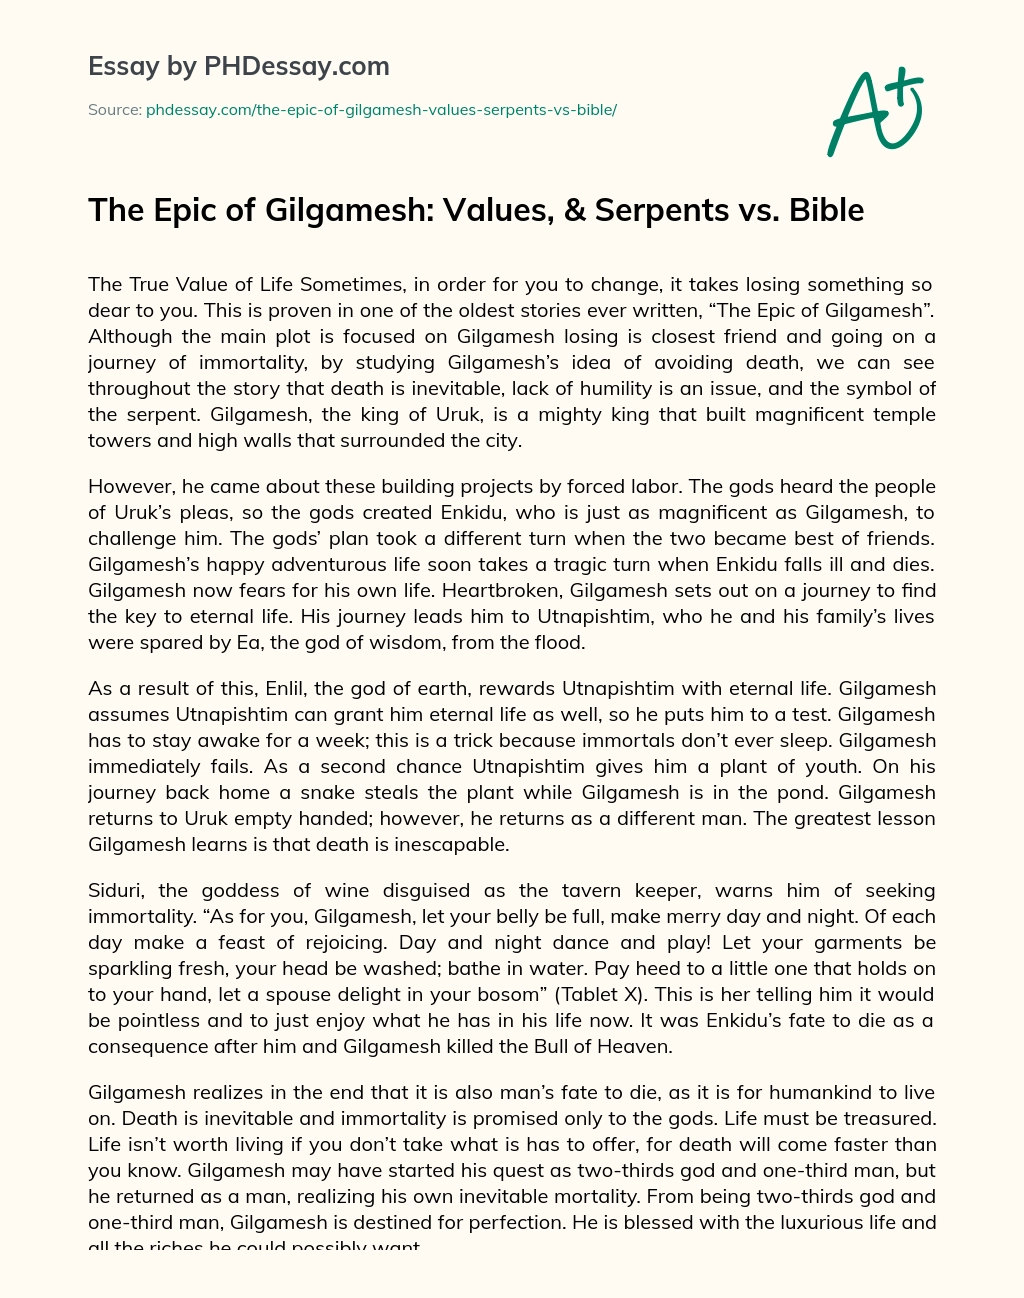 The Epic of Gilgamesh: Values, & Serpents vs. Bible essay